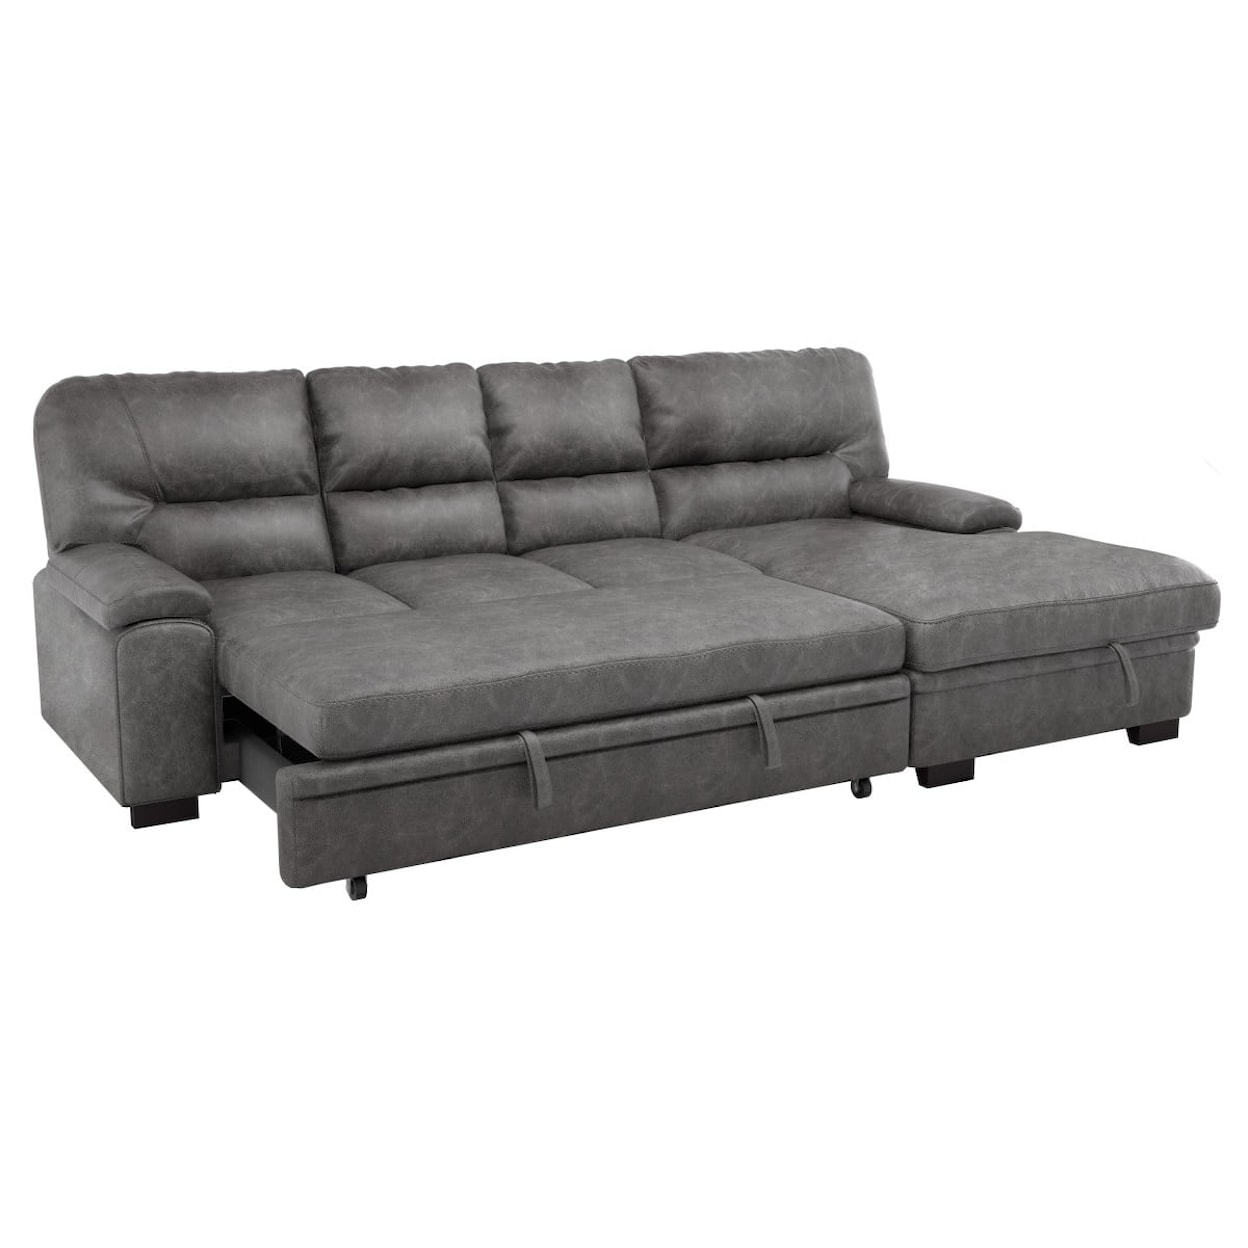 Homelegance Furniture Michigan 2-Piece Sectional Sofa